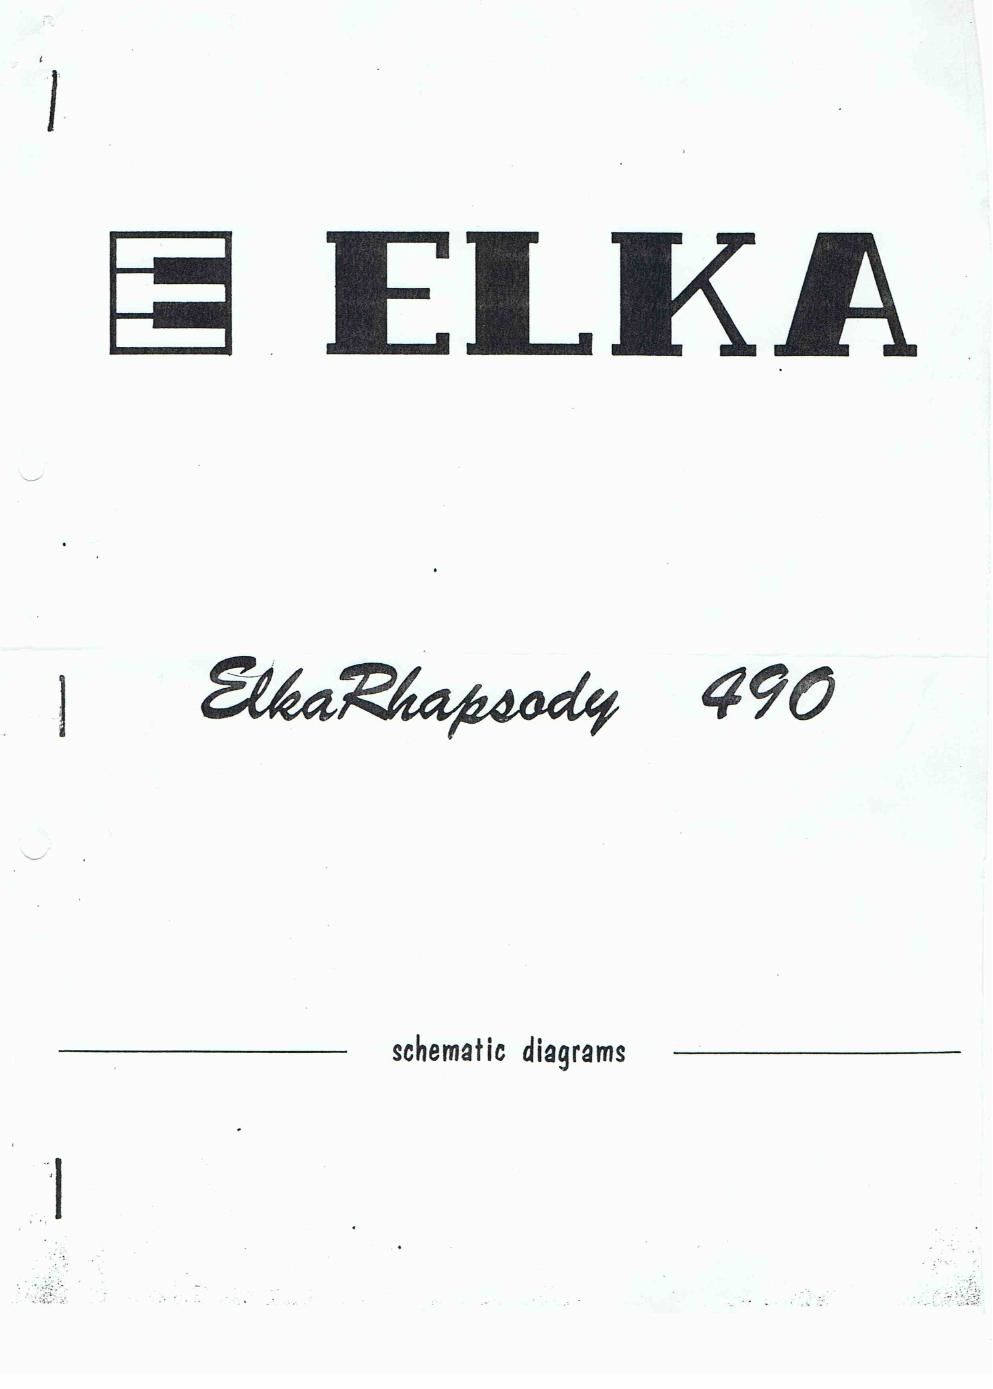 Free Audio Service Manuals - Free download elka elkarhapsody 490 .